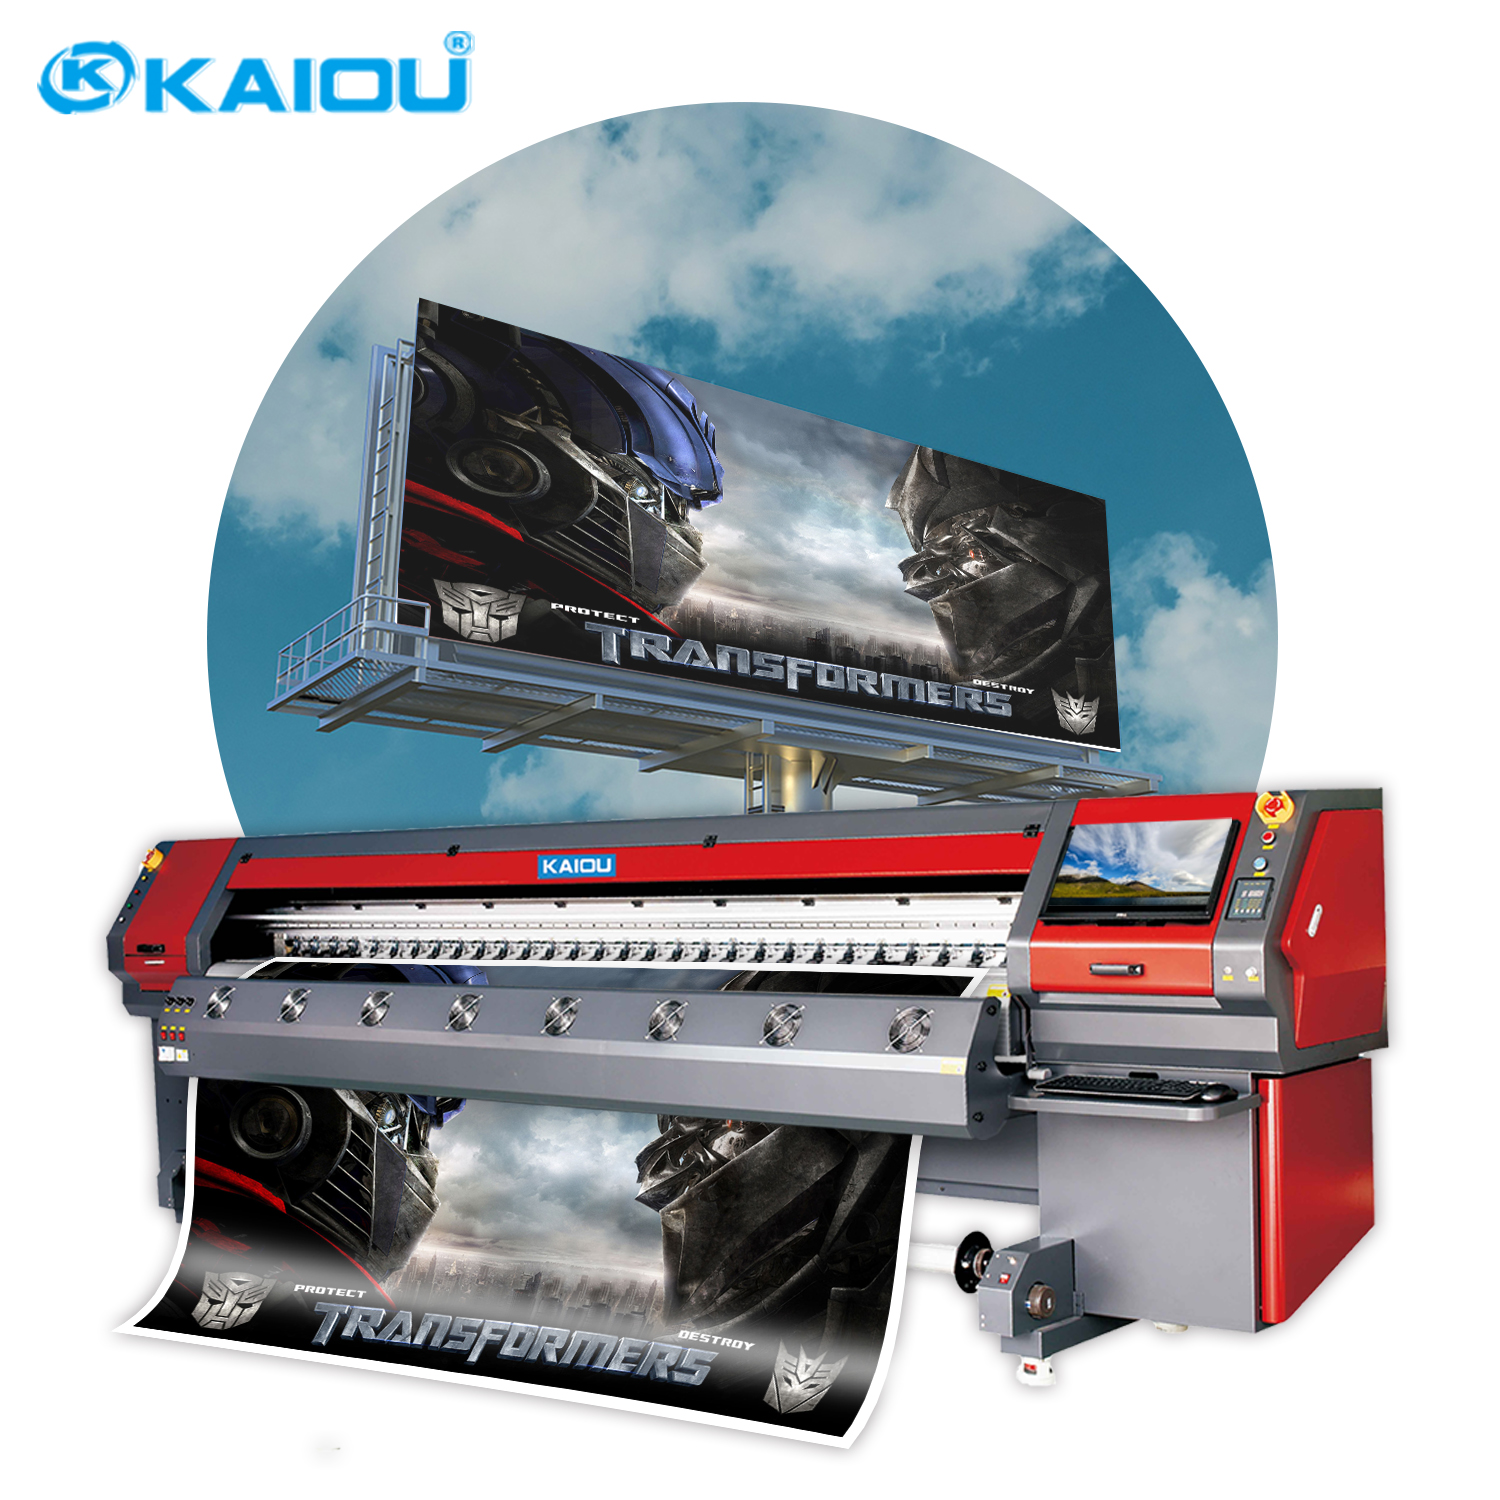 KAIOU Solvent Printer 3.2m Print Width